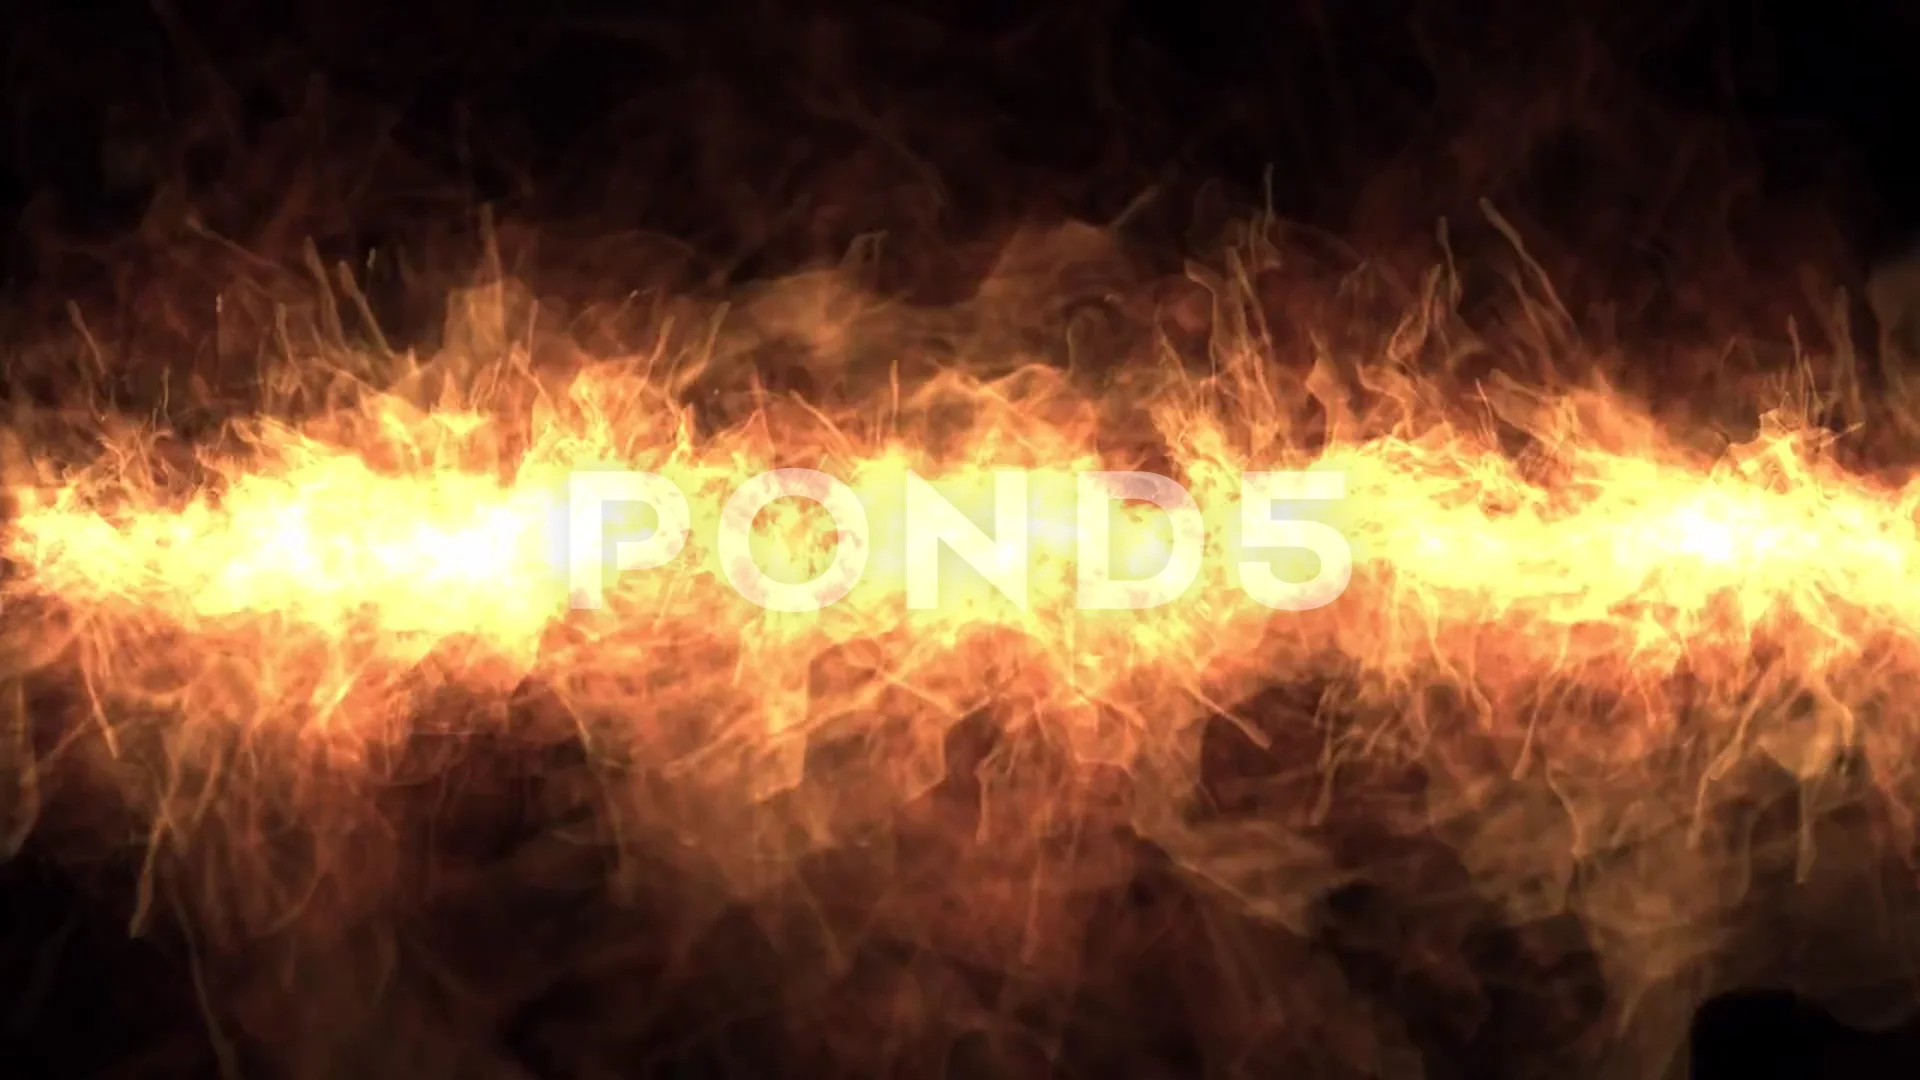 https://images.pond5.com/fire-line-glowing-flames-overlay-footage-165481728_prevstill.jpeg